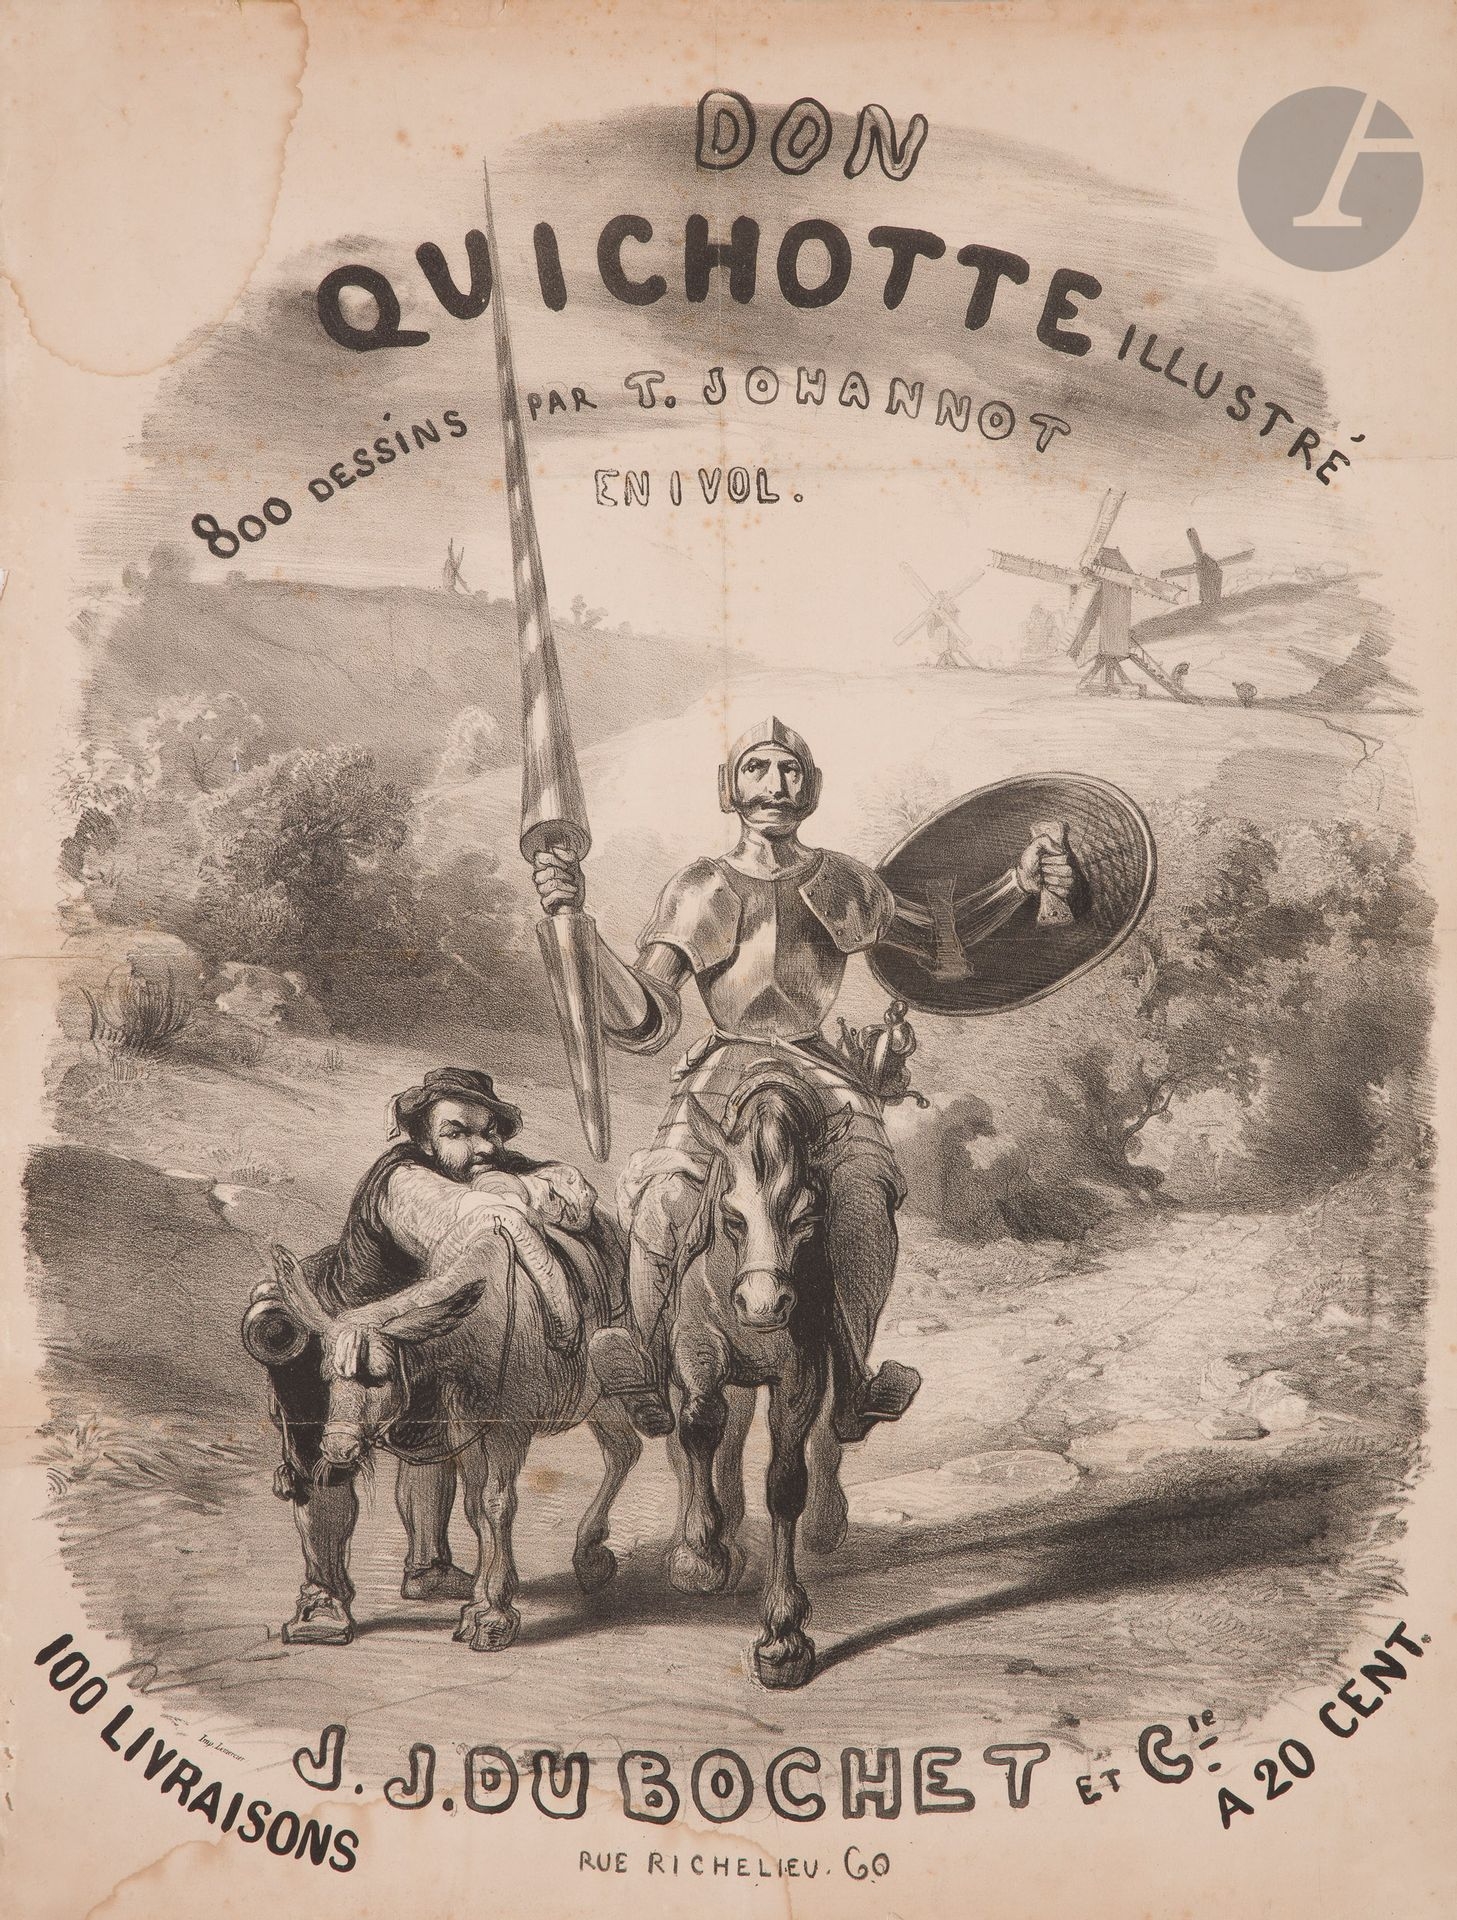 Don Quichotte by Tony Johannot, 1836